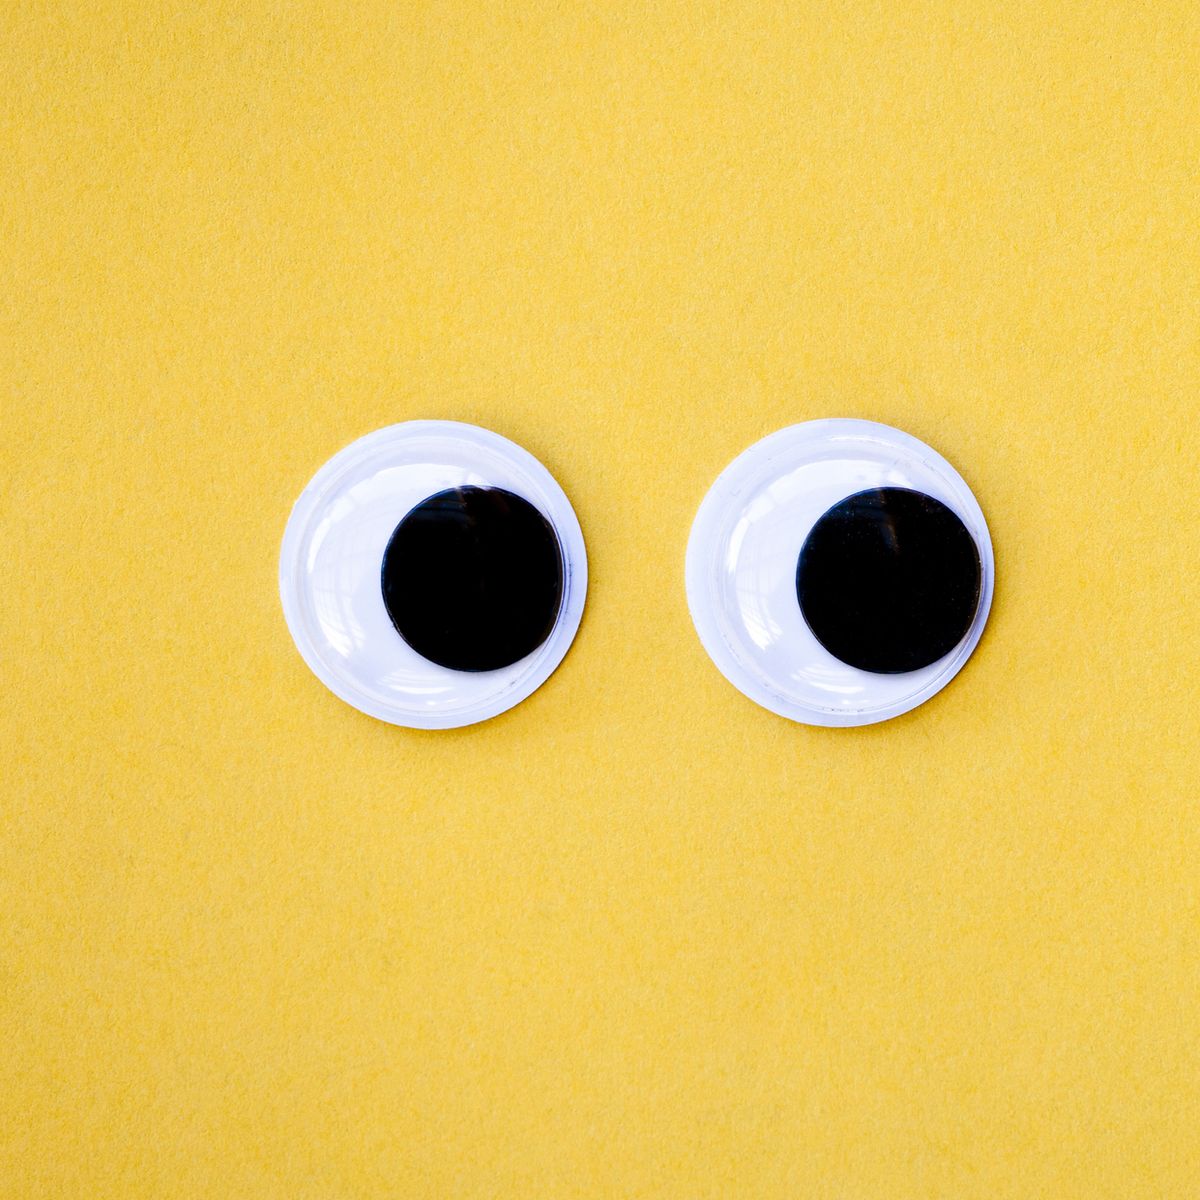 Googly eyes on yellow